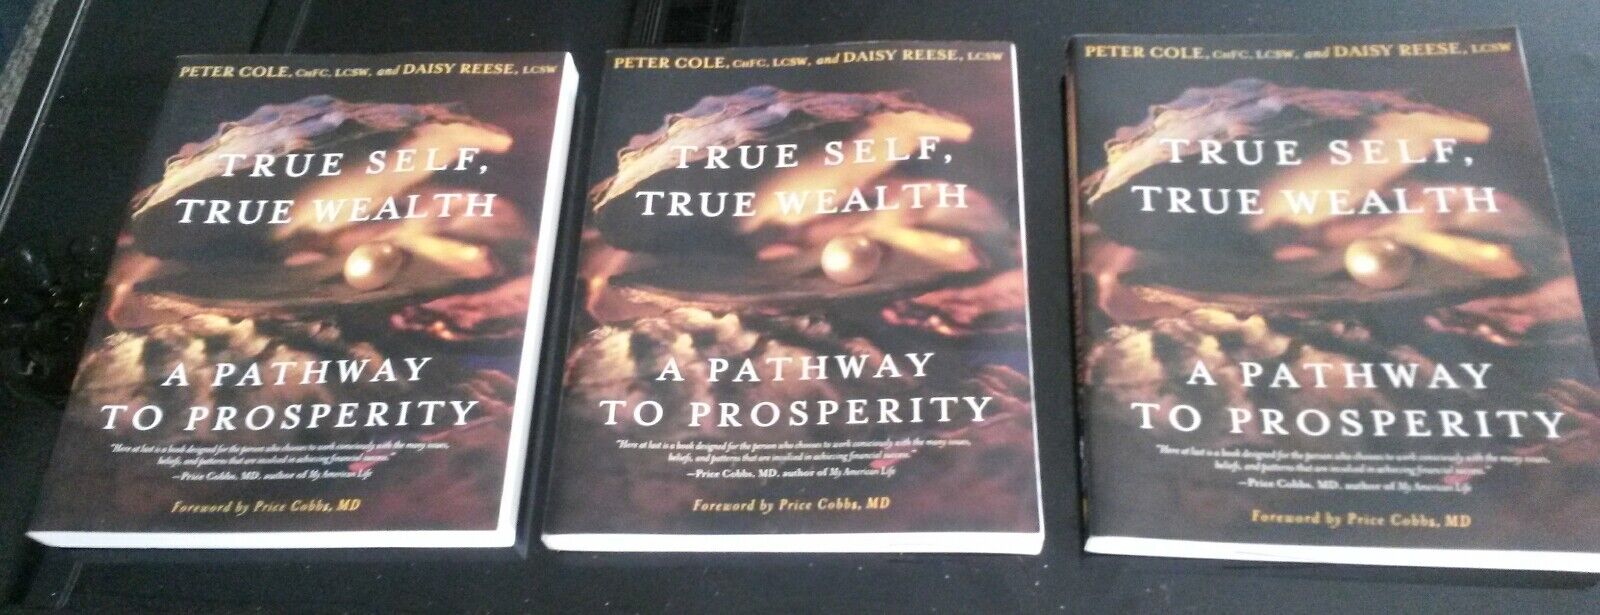 Lot Of 3 Books True Self, True Wealth A Pathway To Prosperity Price Cobbs New